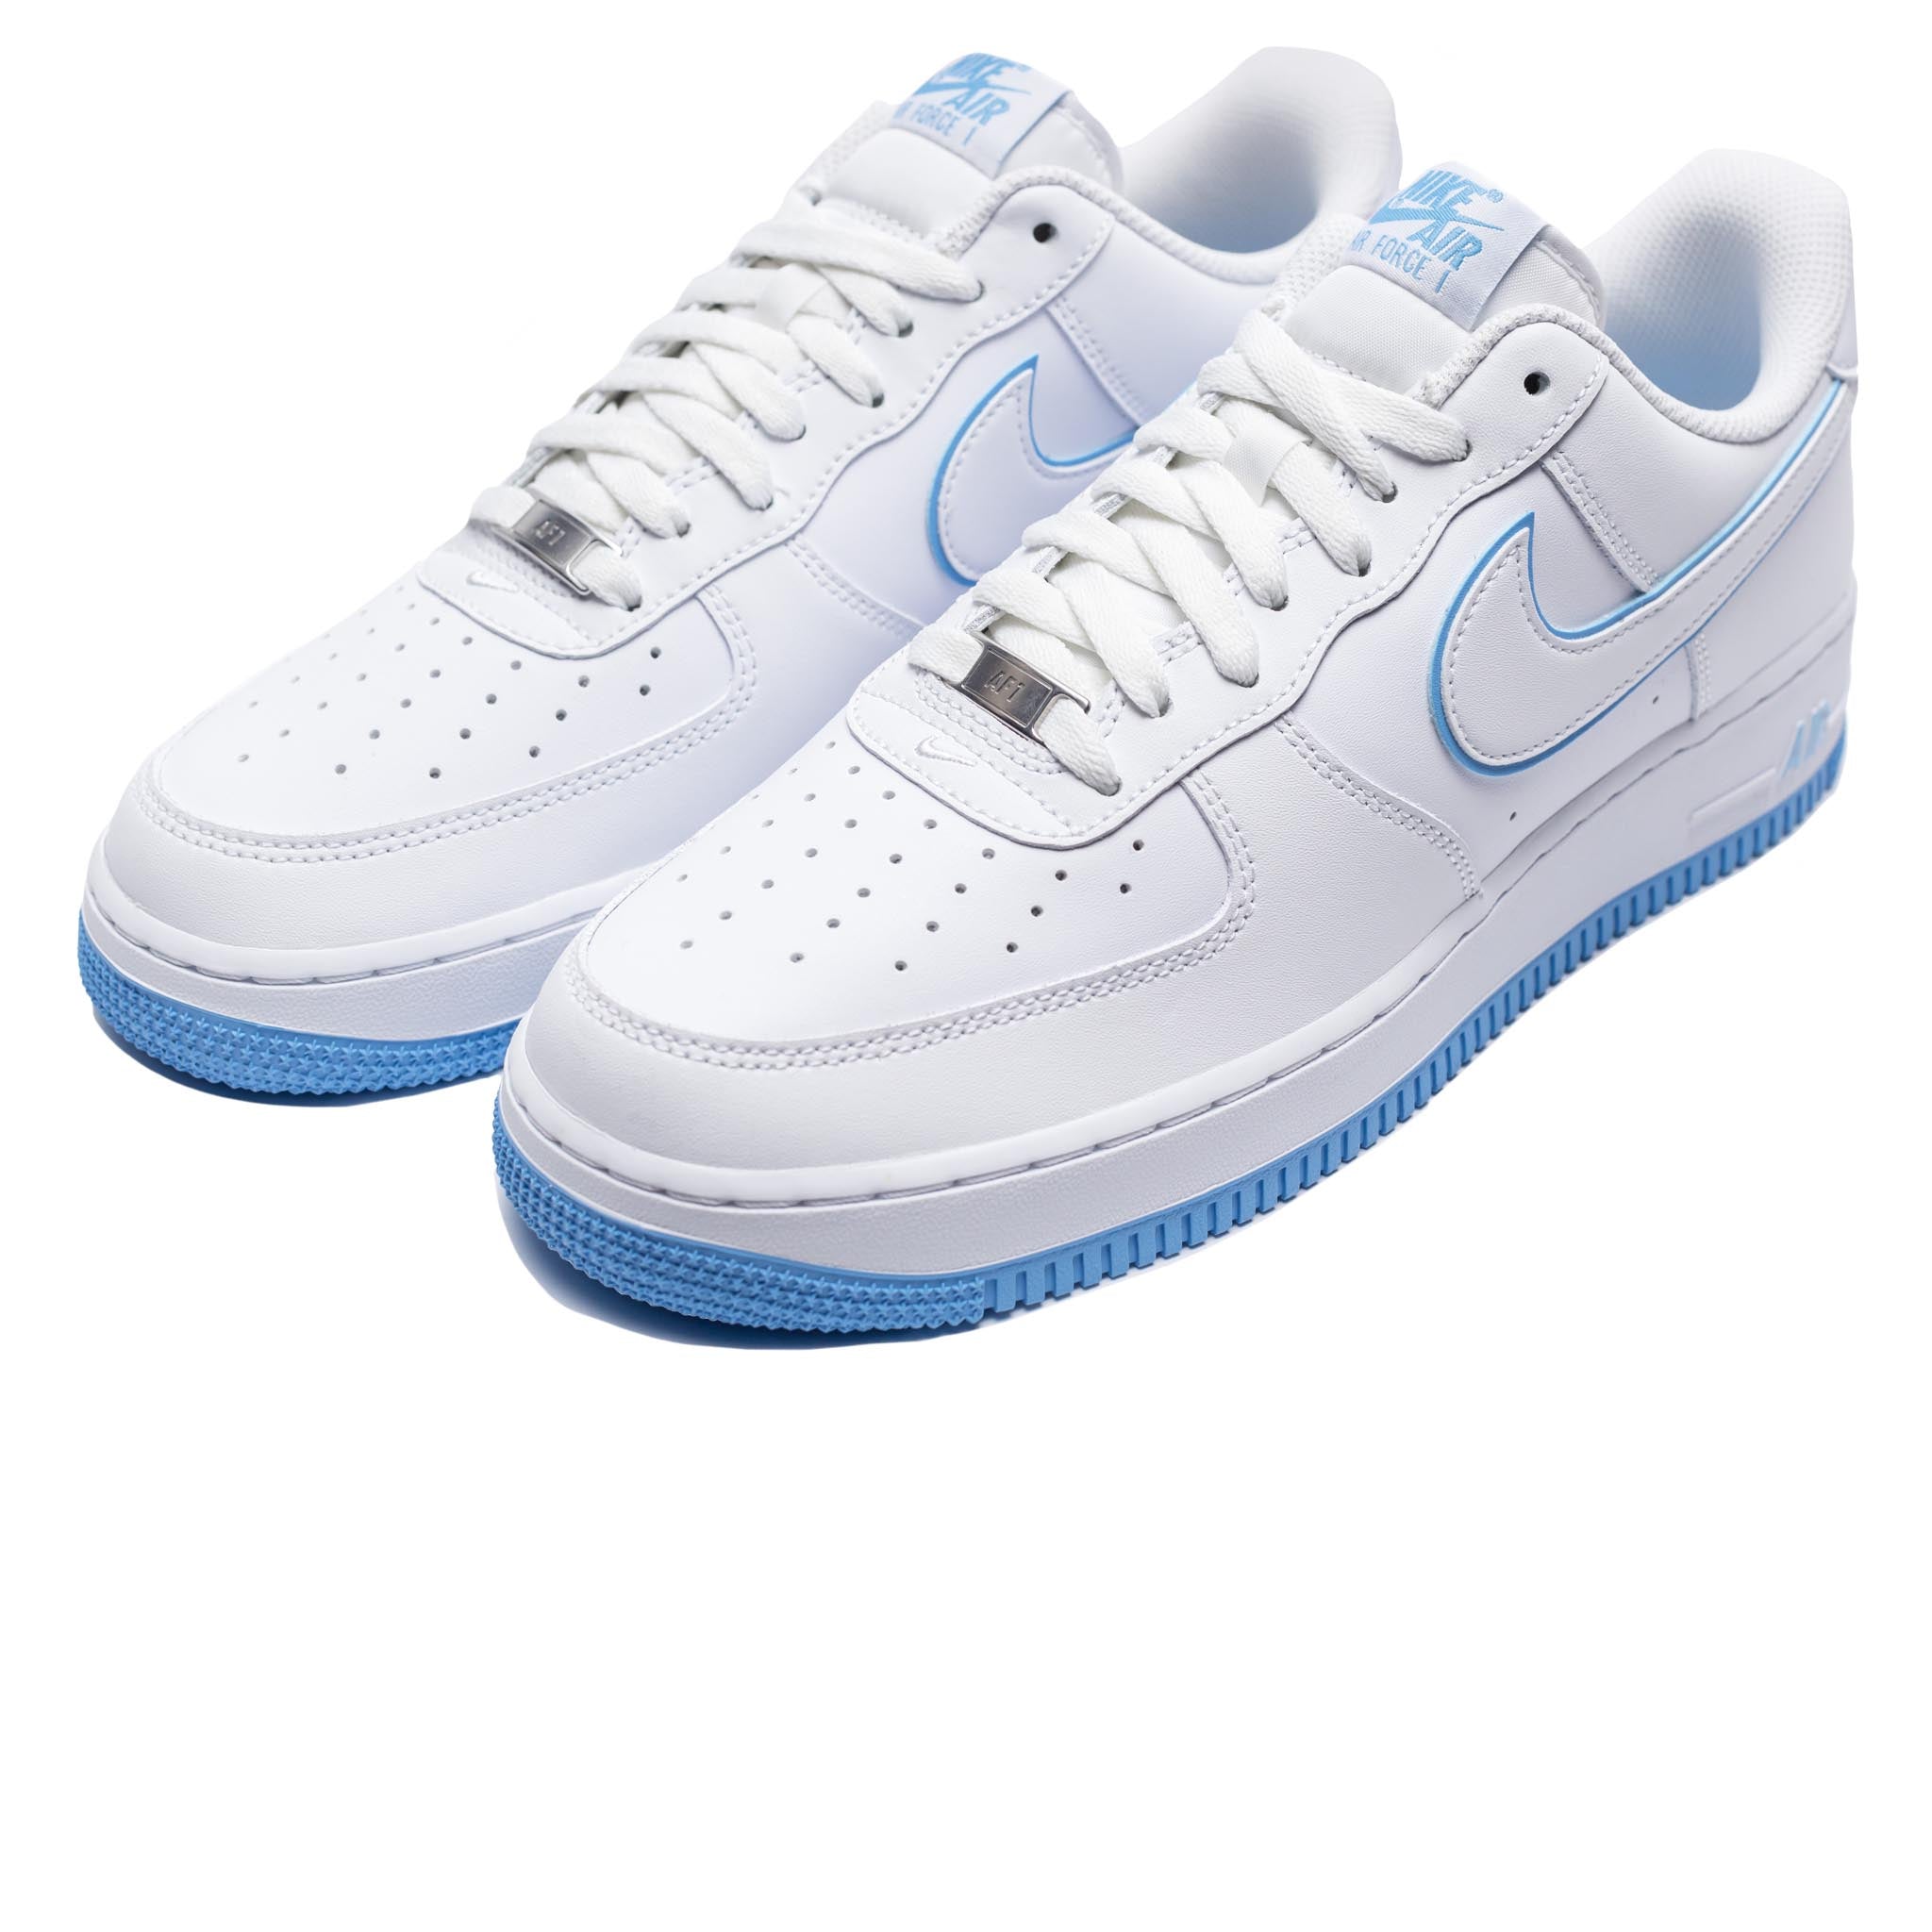 Nike Air Force 1 '07 (White/University Blue) 8.5